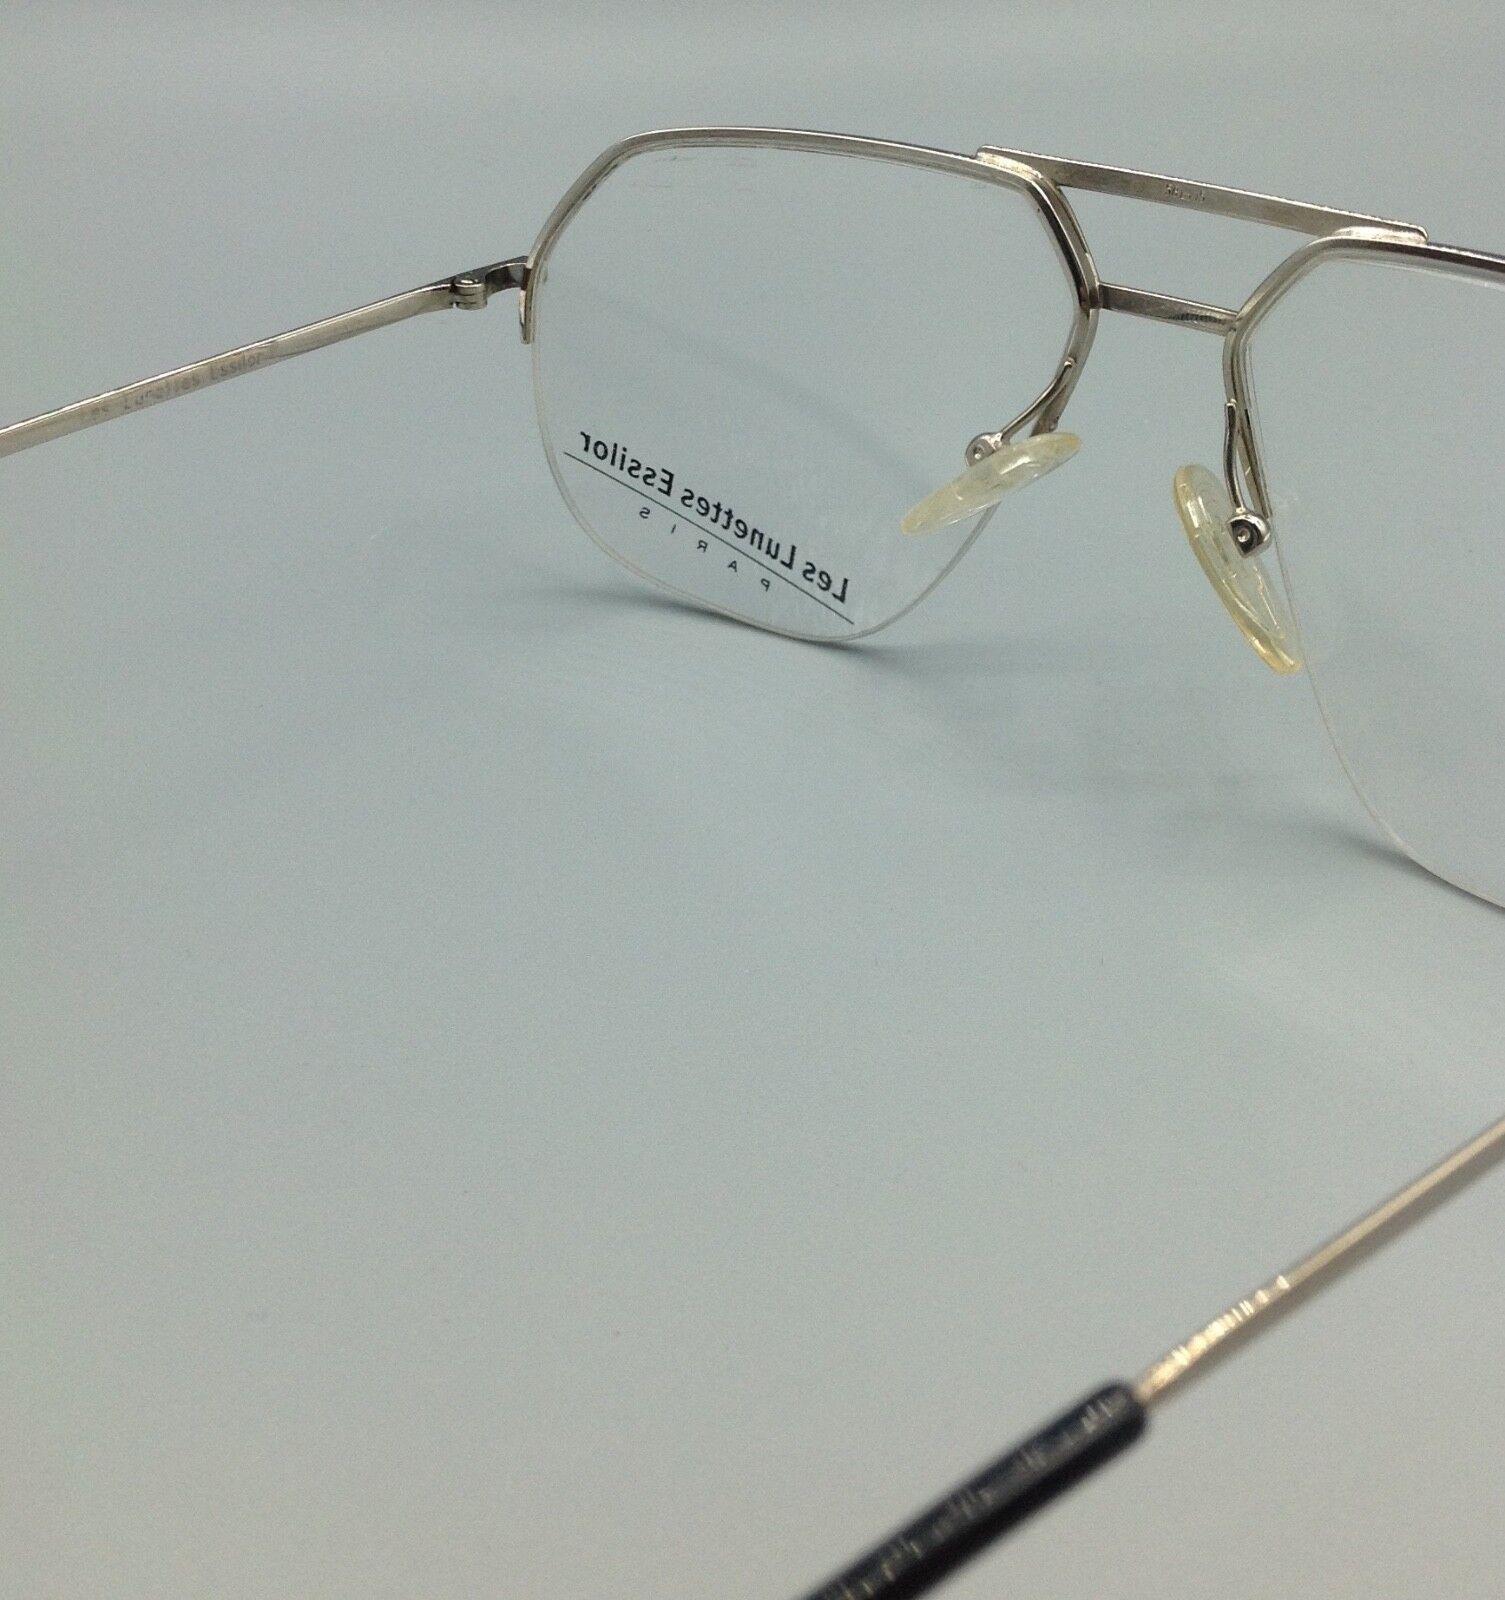 Les Lunettes Essilor occhiale vintage model 700 15 000 eyewear made in France